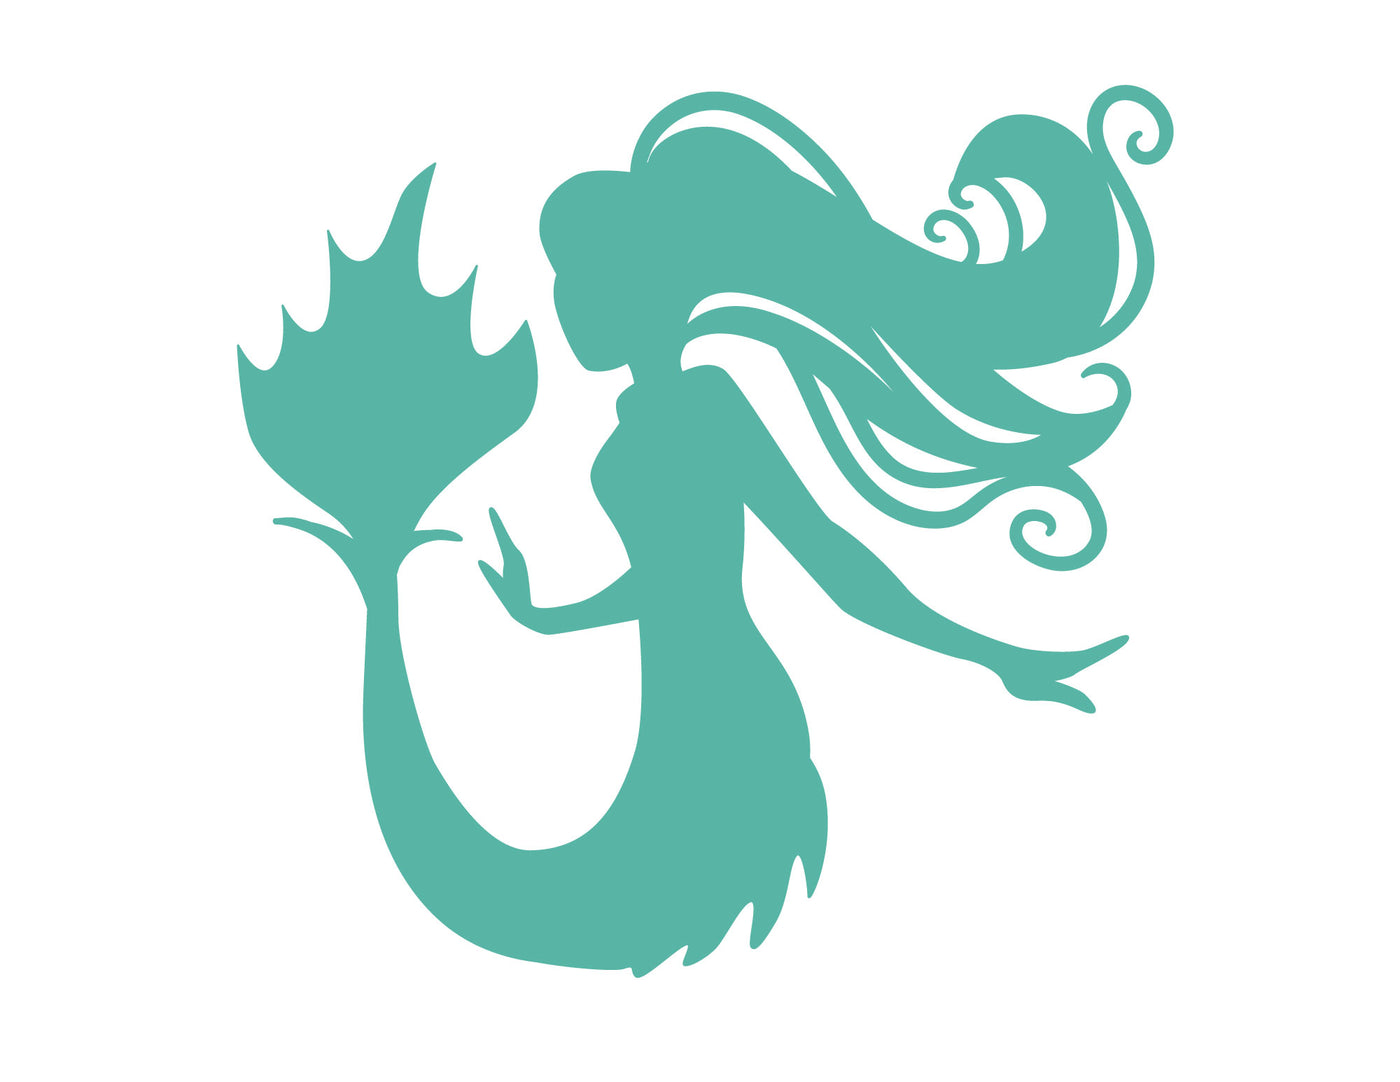 SVG Mermaid 2 cut file for Cricut, Silhouette, PNG, JPG